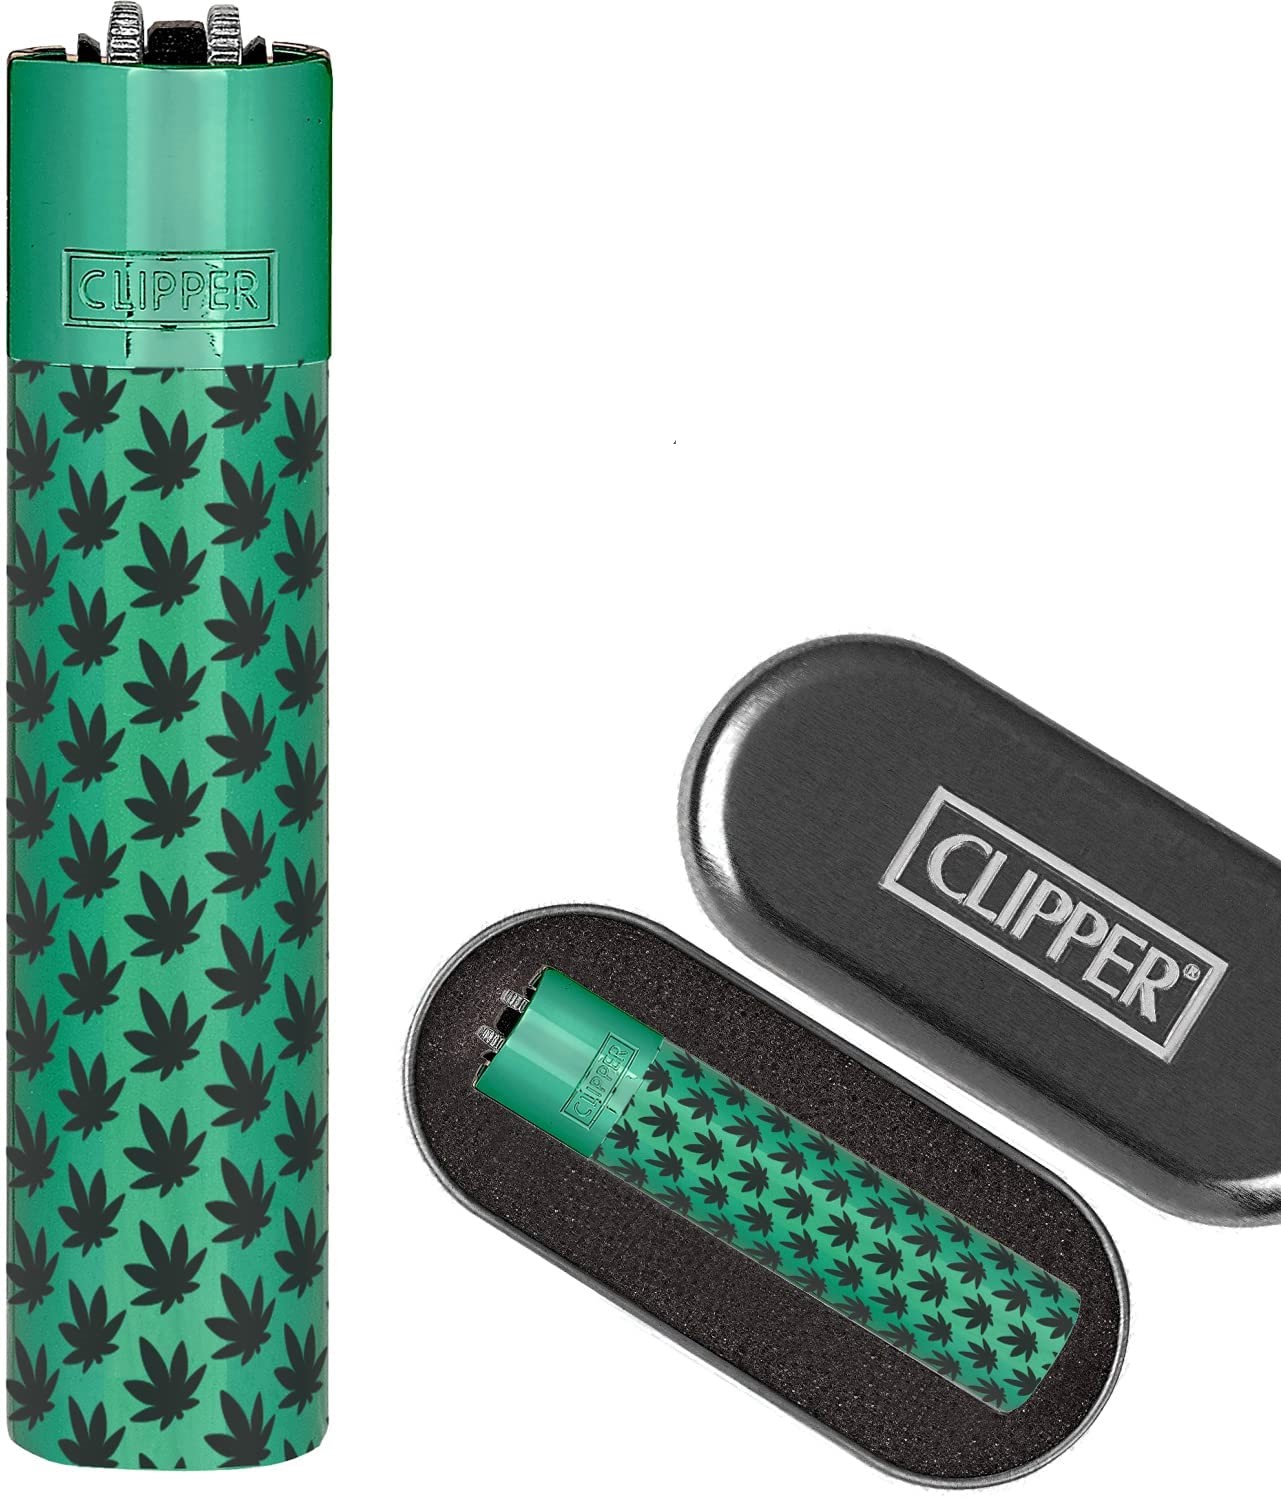 1 Mecheros Clipper acero mini leaves verde-negro en caja metalica para  regalo. [] - 9,00€TodoBolígrafos.com 